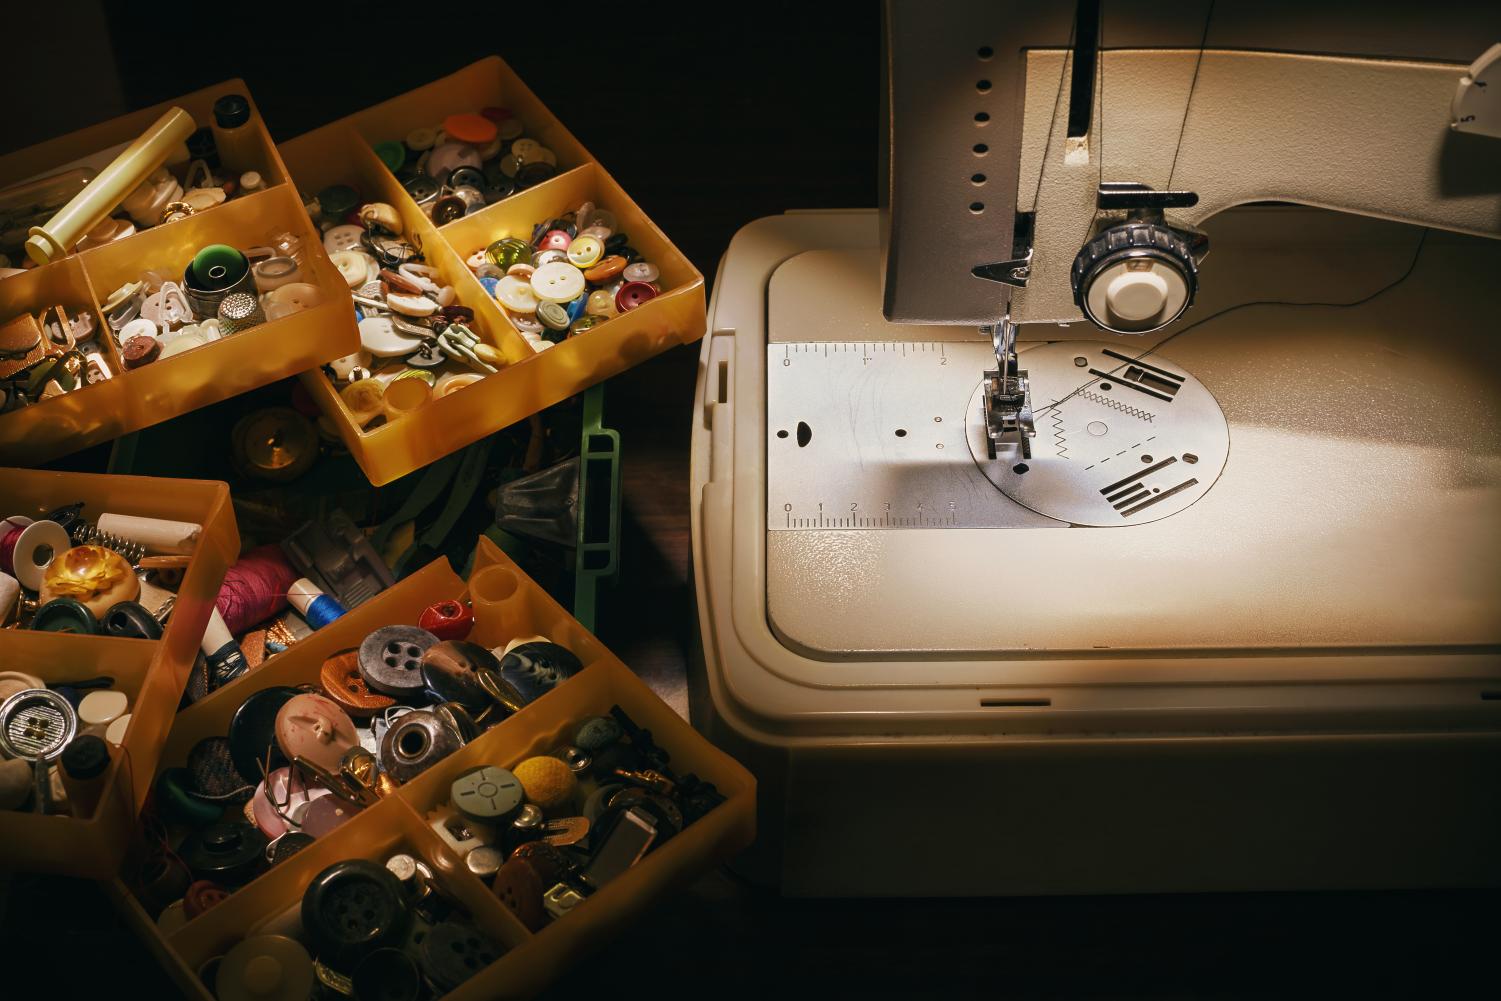 Sewing Machine on Table (dejankrsmanovic. licensed under CC BY 2.0.)
